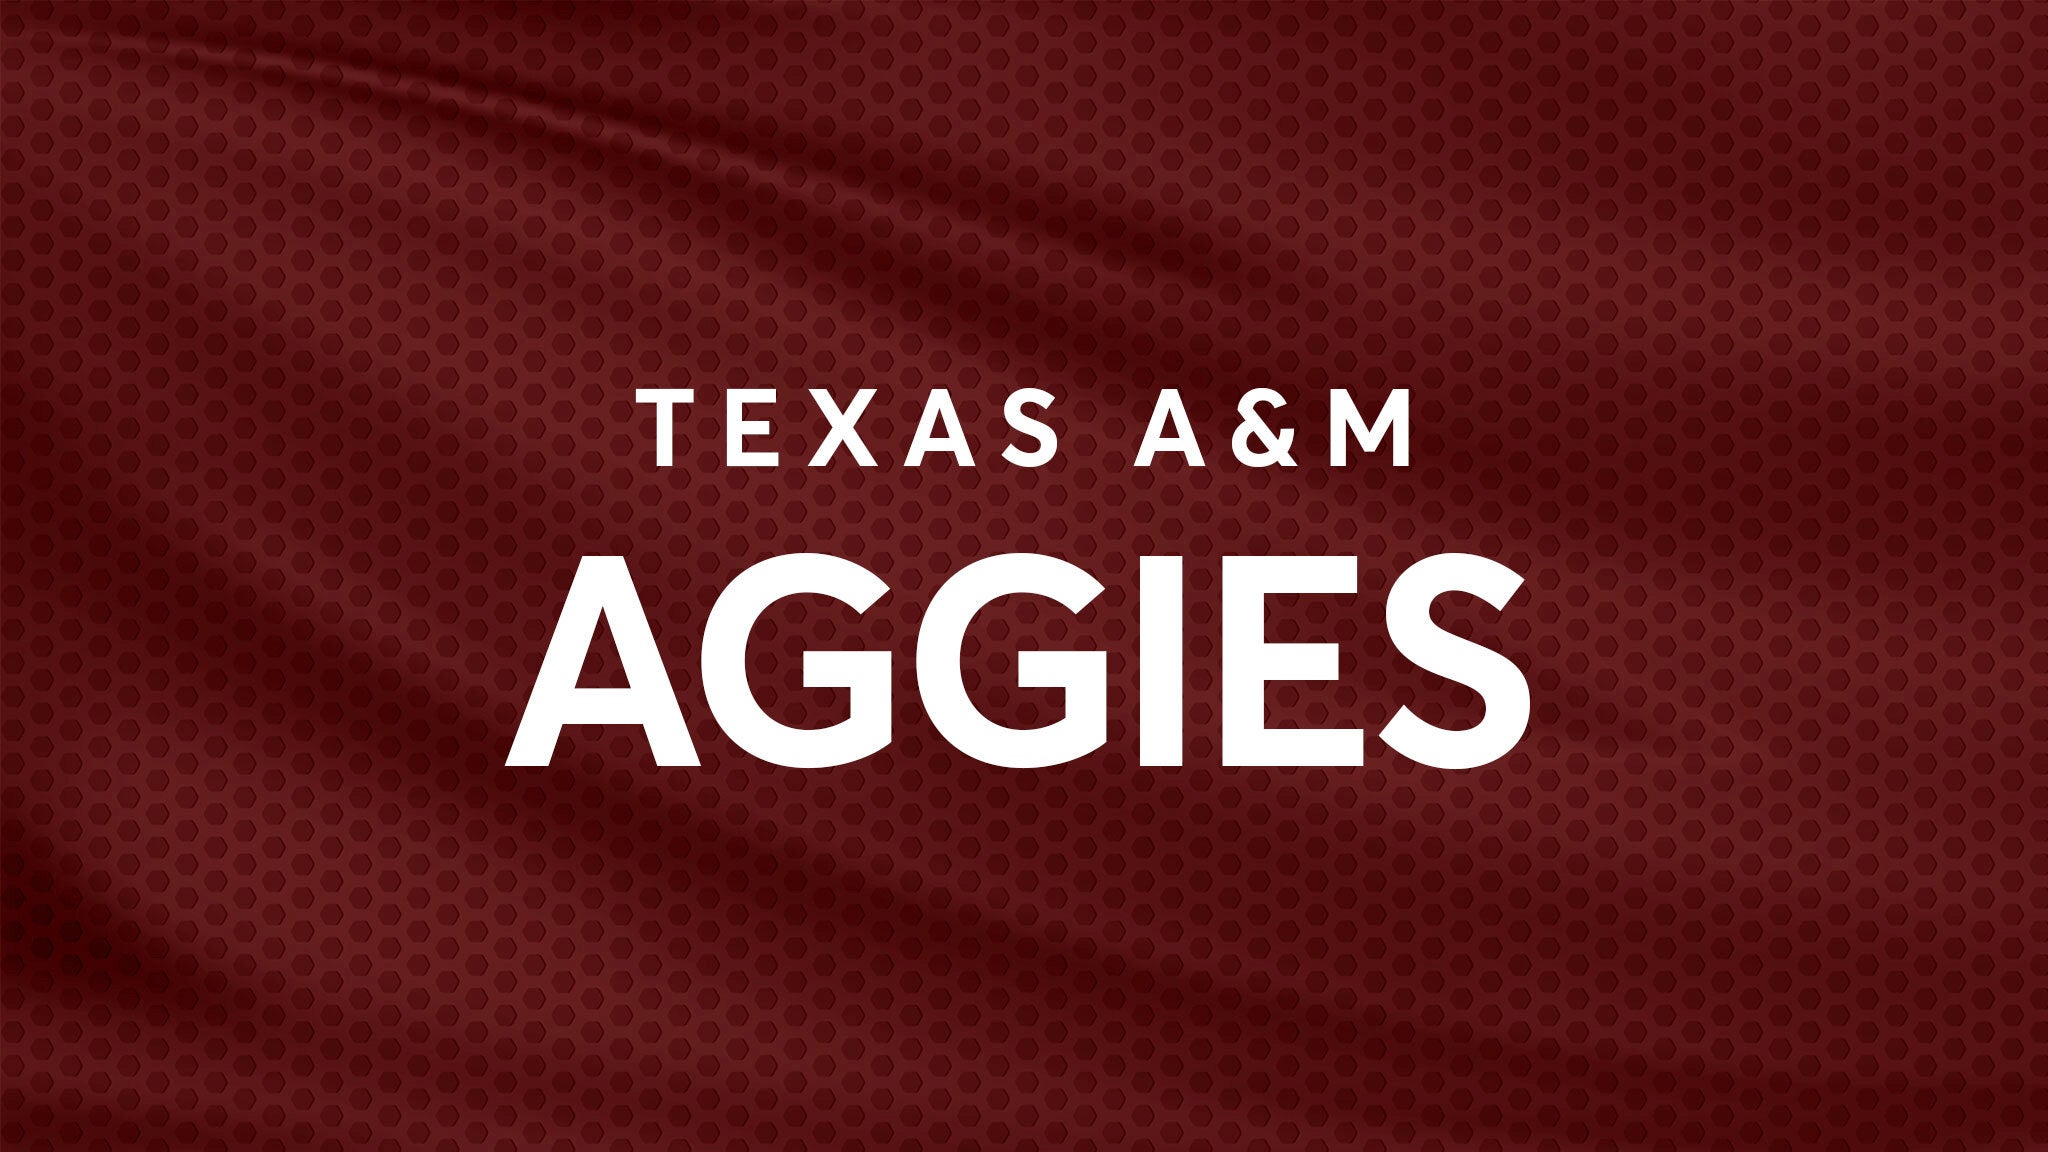 Texas A&M Aggies Baseball vs. Houston Cougars Baseball